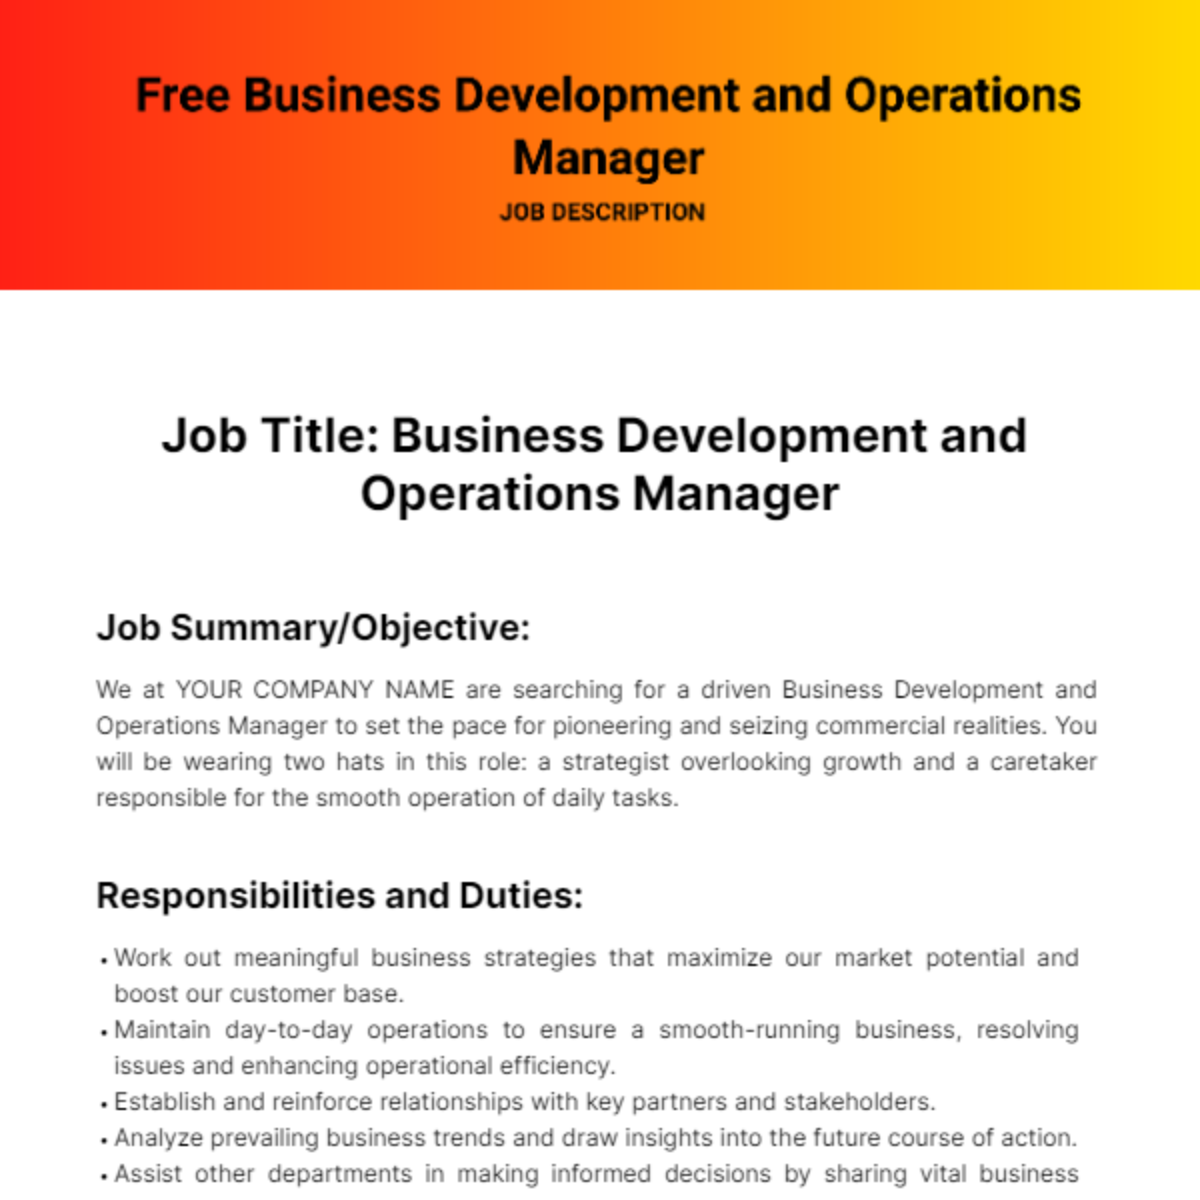 Business Development and Operations Manager Job Description Template